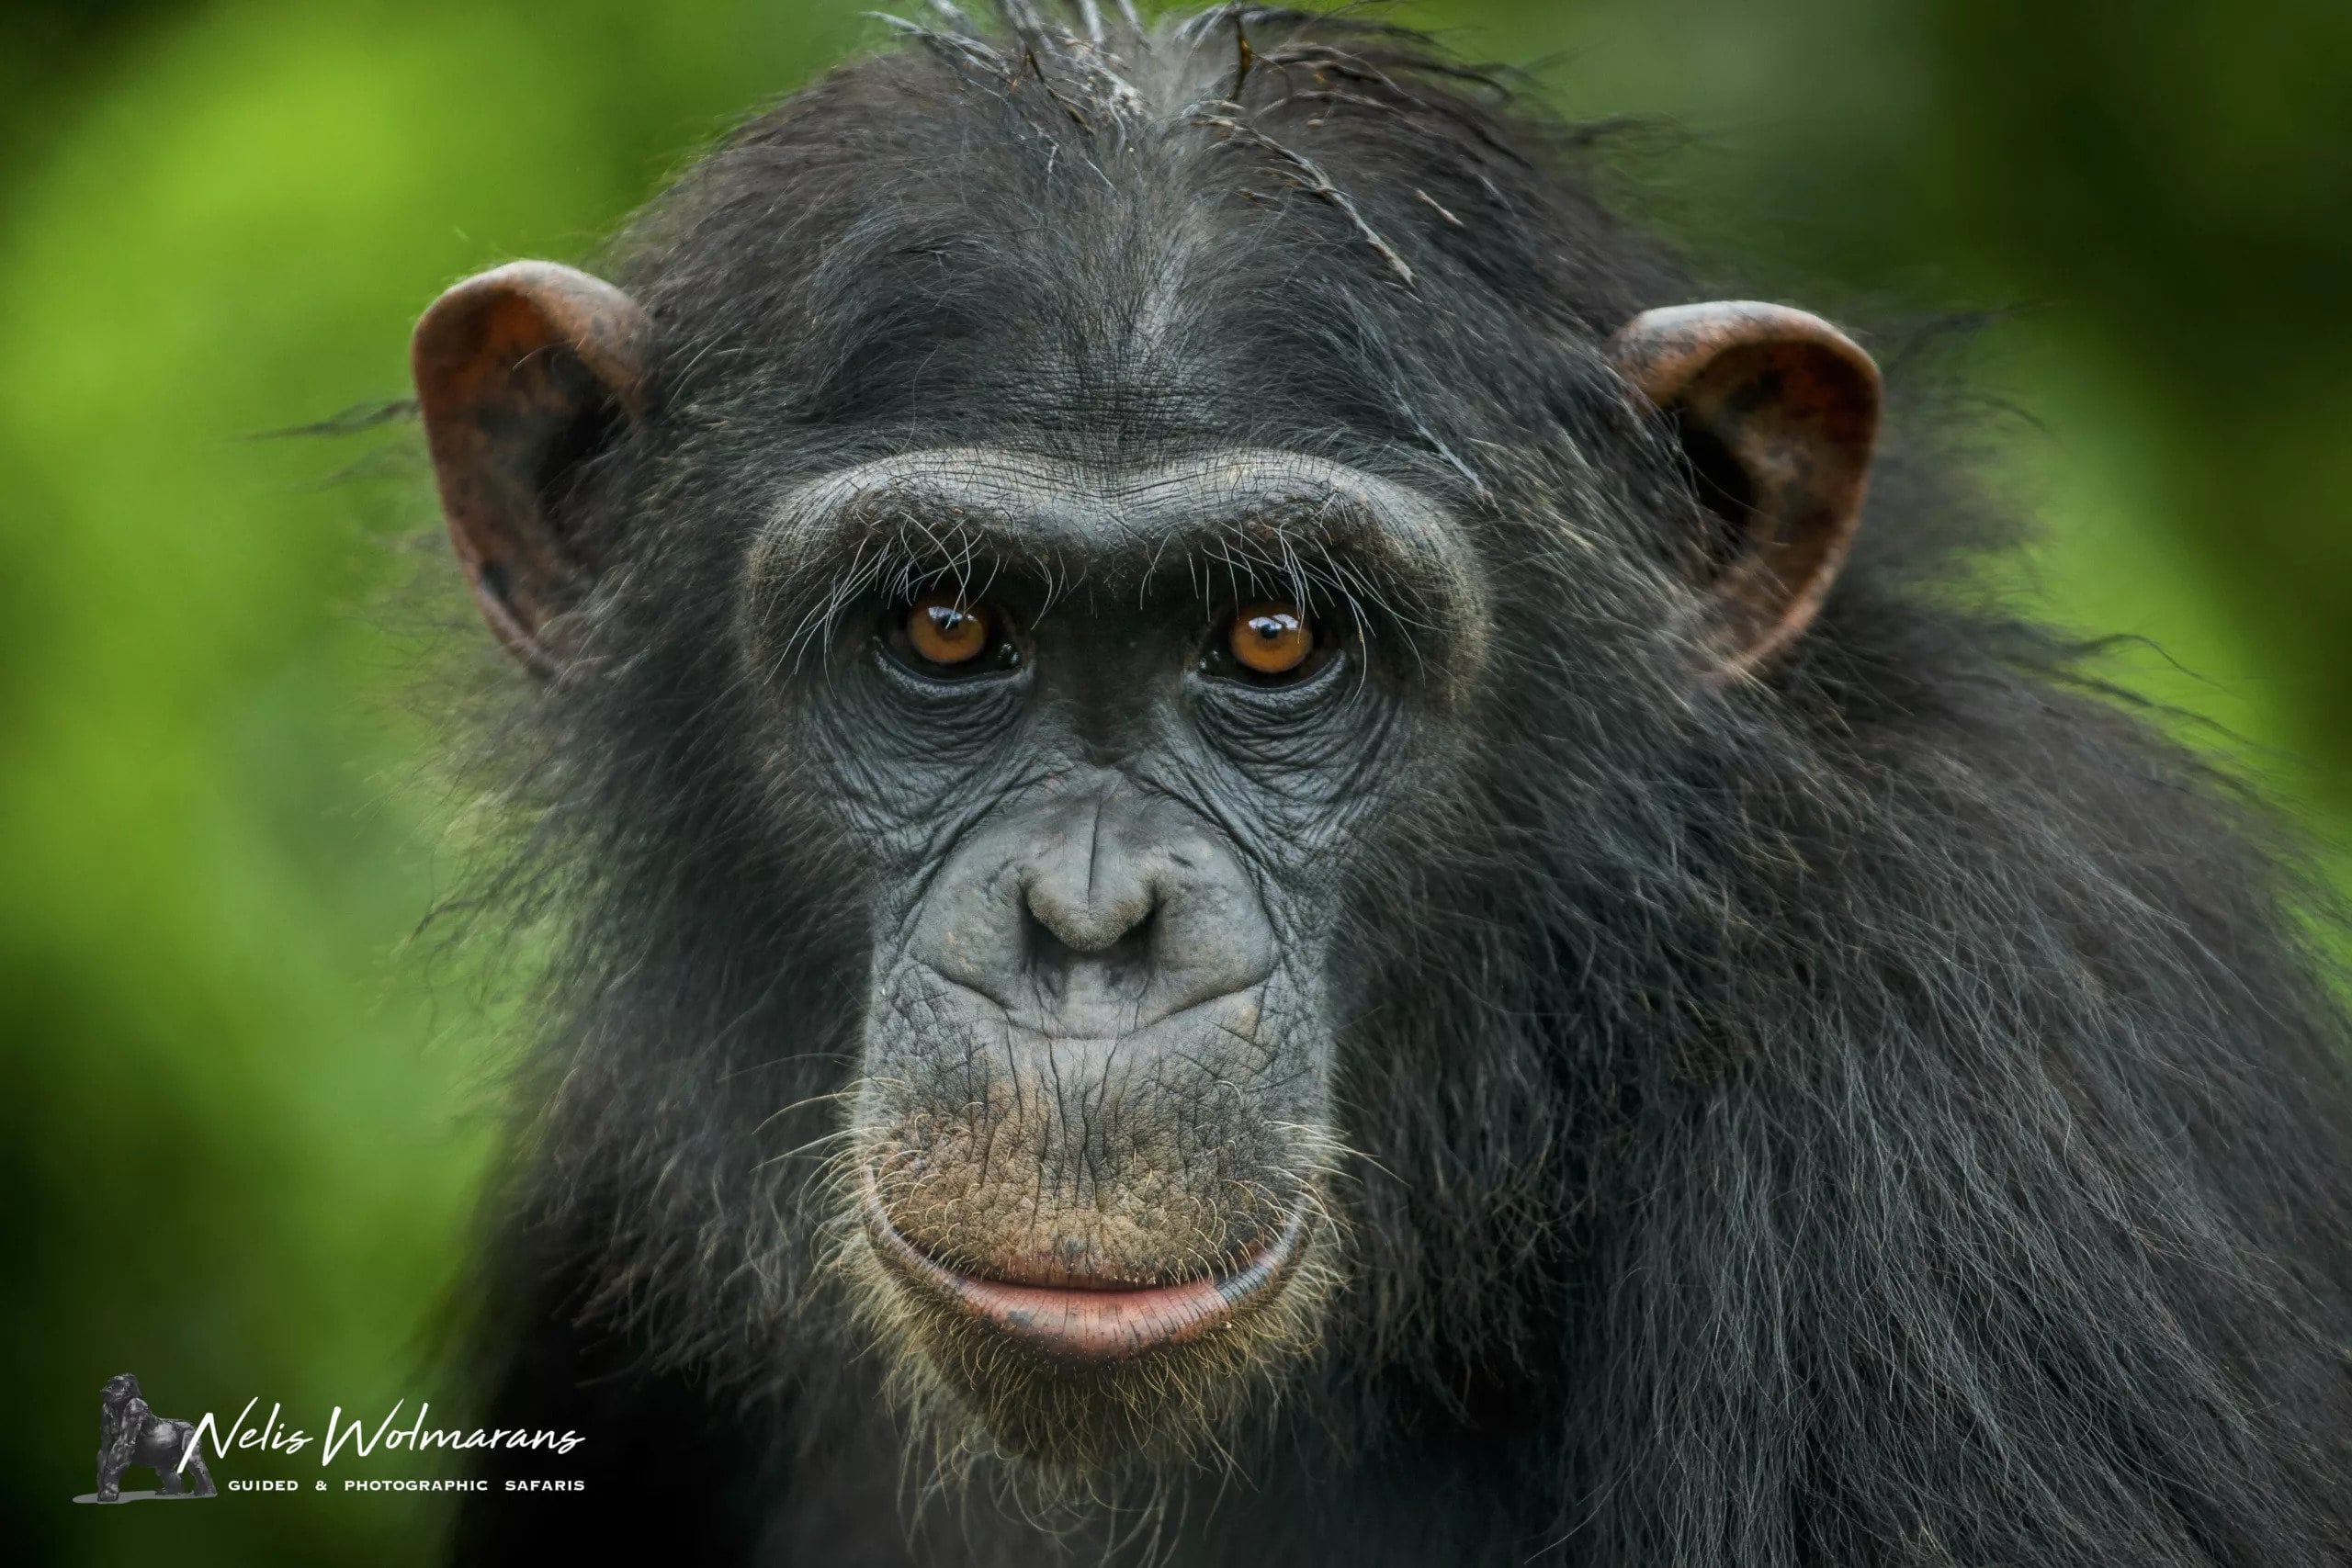 Chimpanzee trekking photo safari in Uganda by Nelis Wolmarans